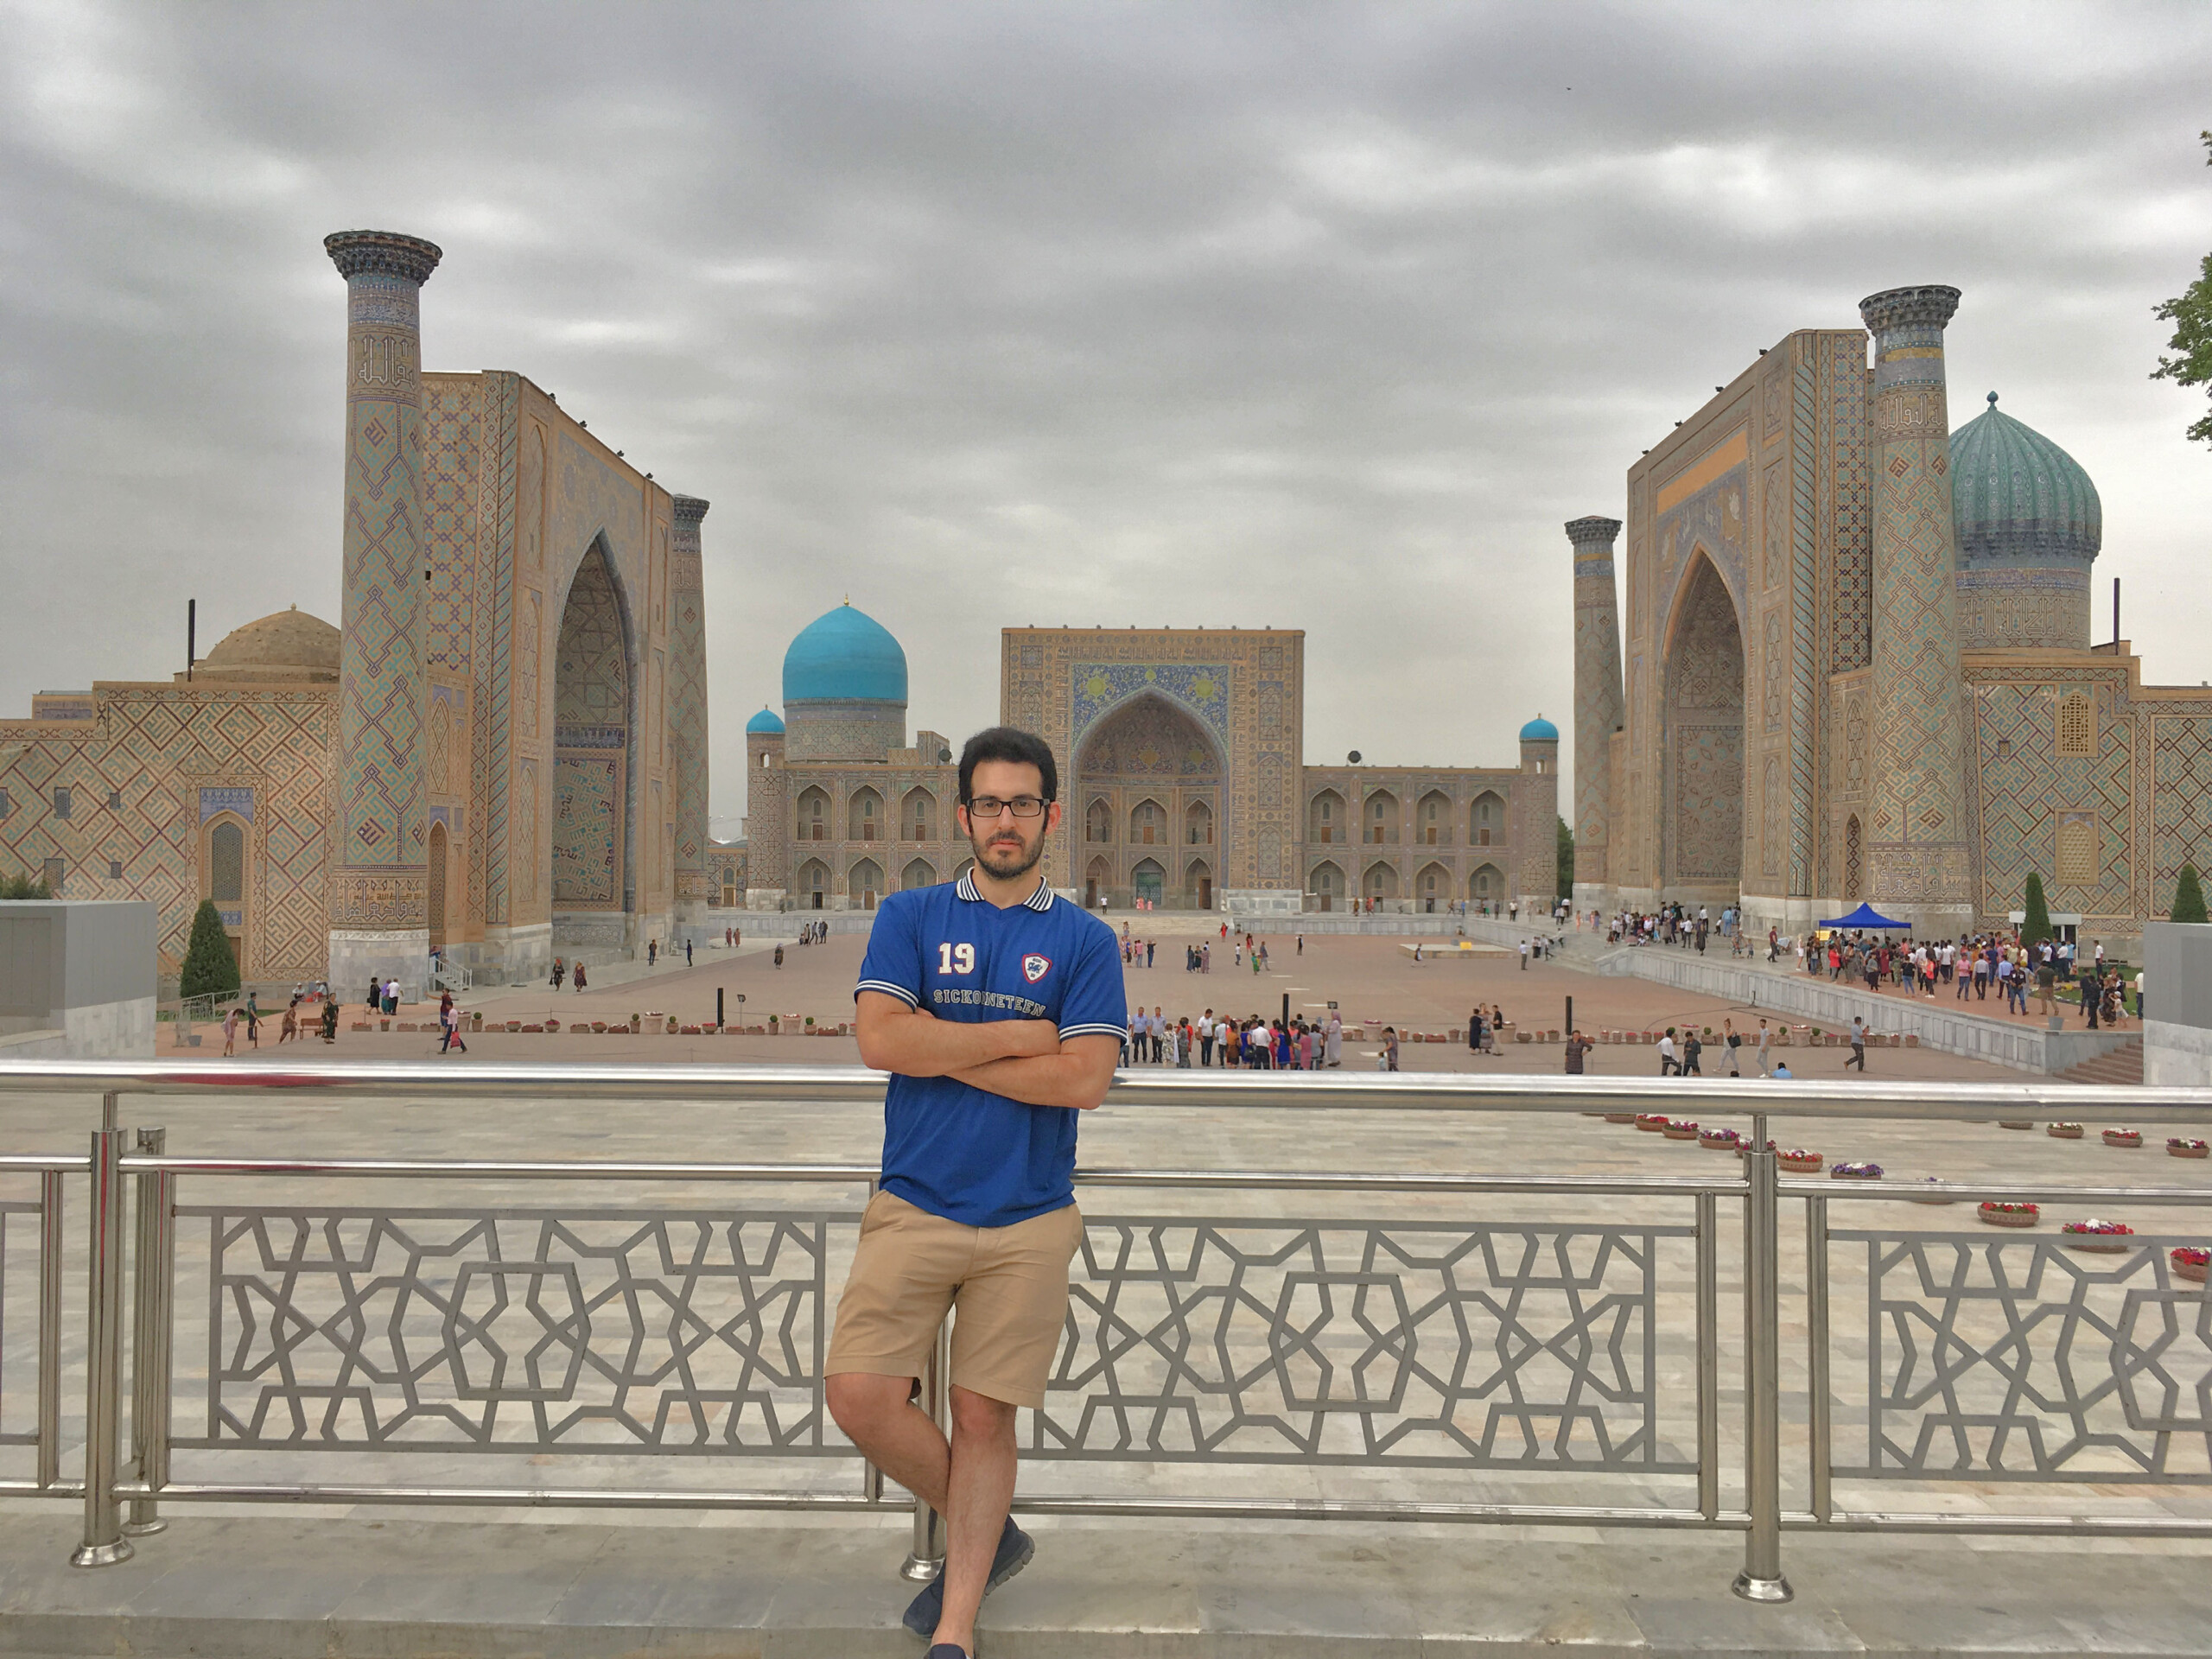 Registan public square, Samarkand, Uzbekistan